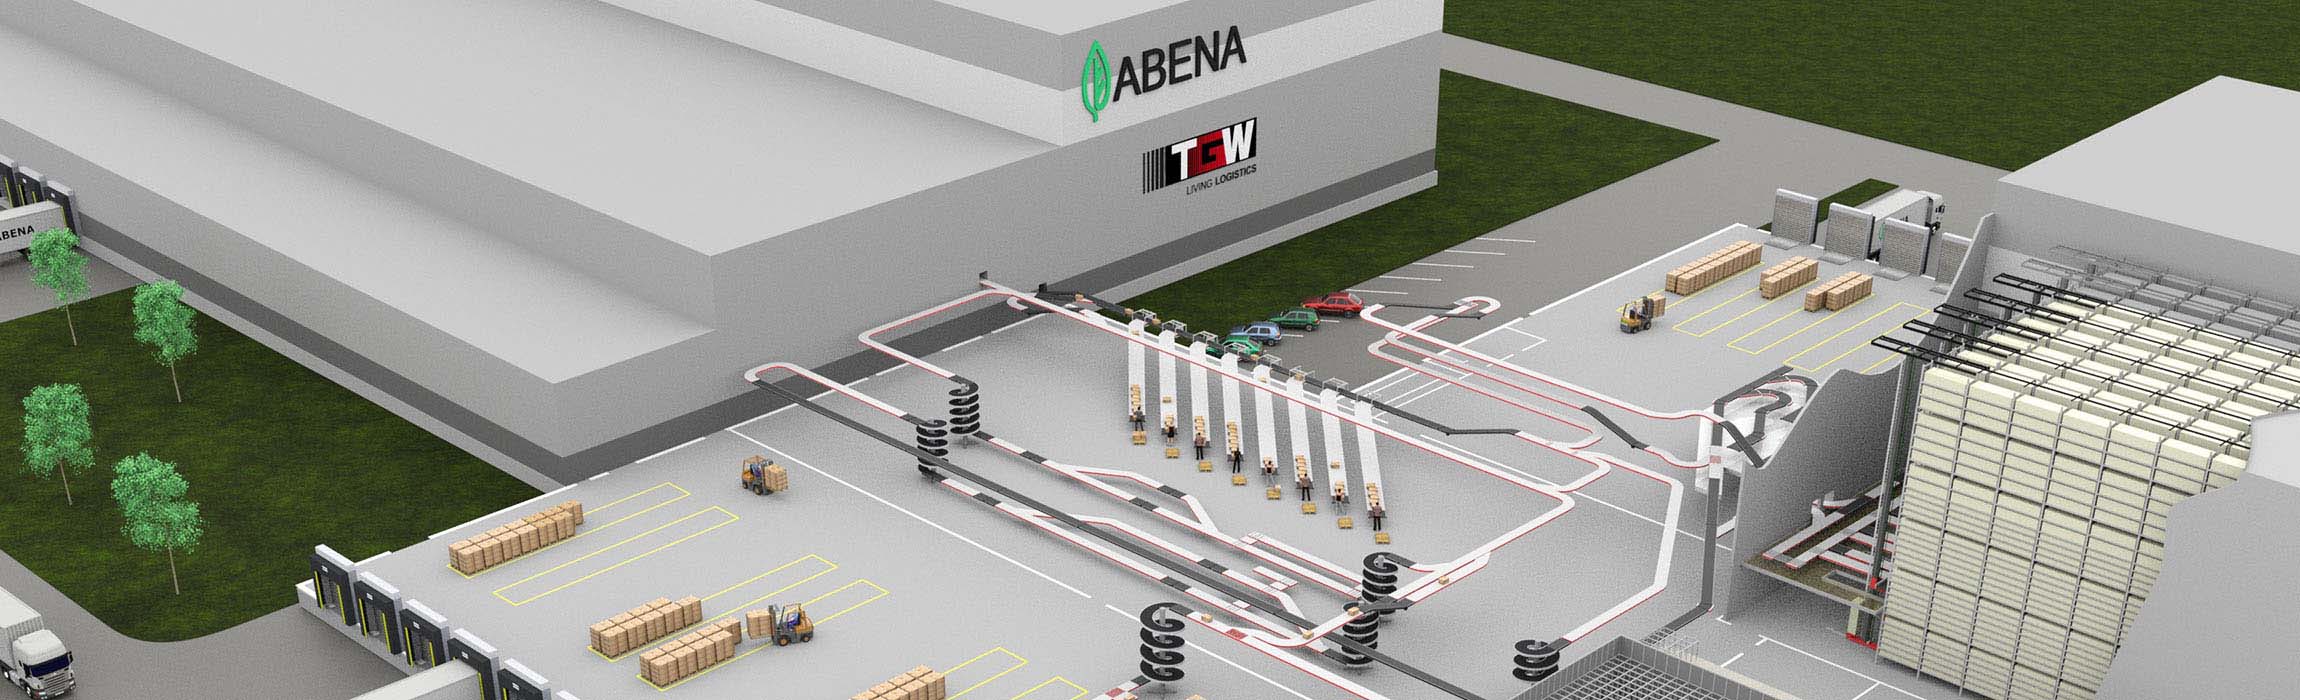 Abena expands its logistics center with TGW's energy-efficient conveyor network